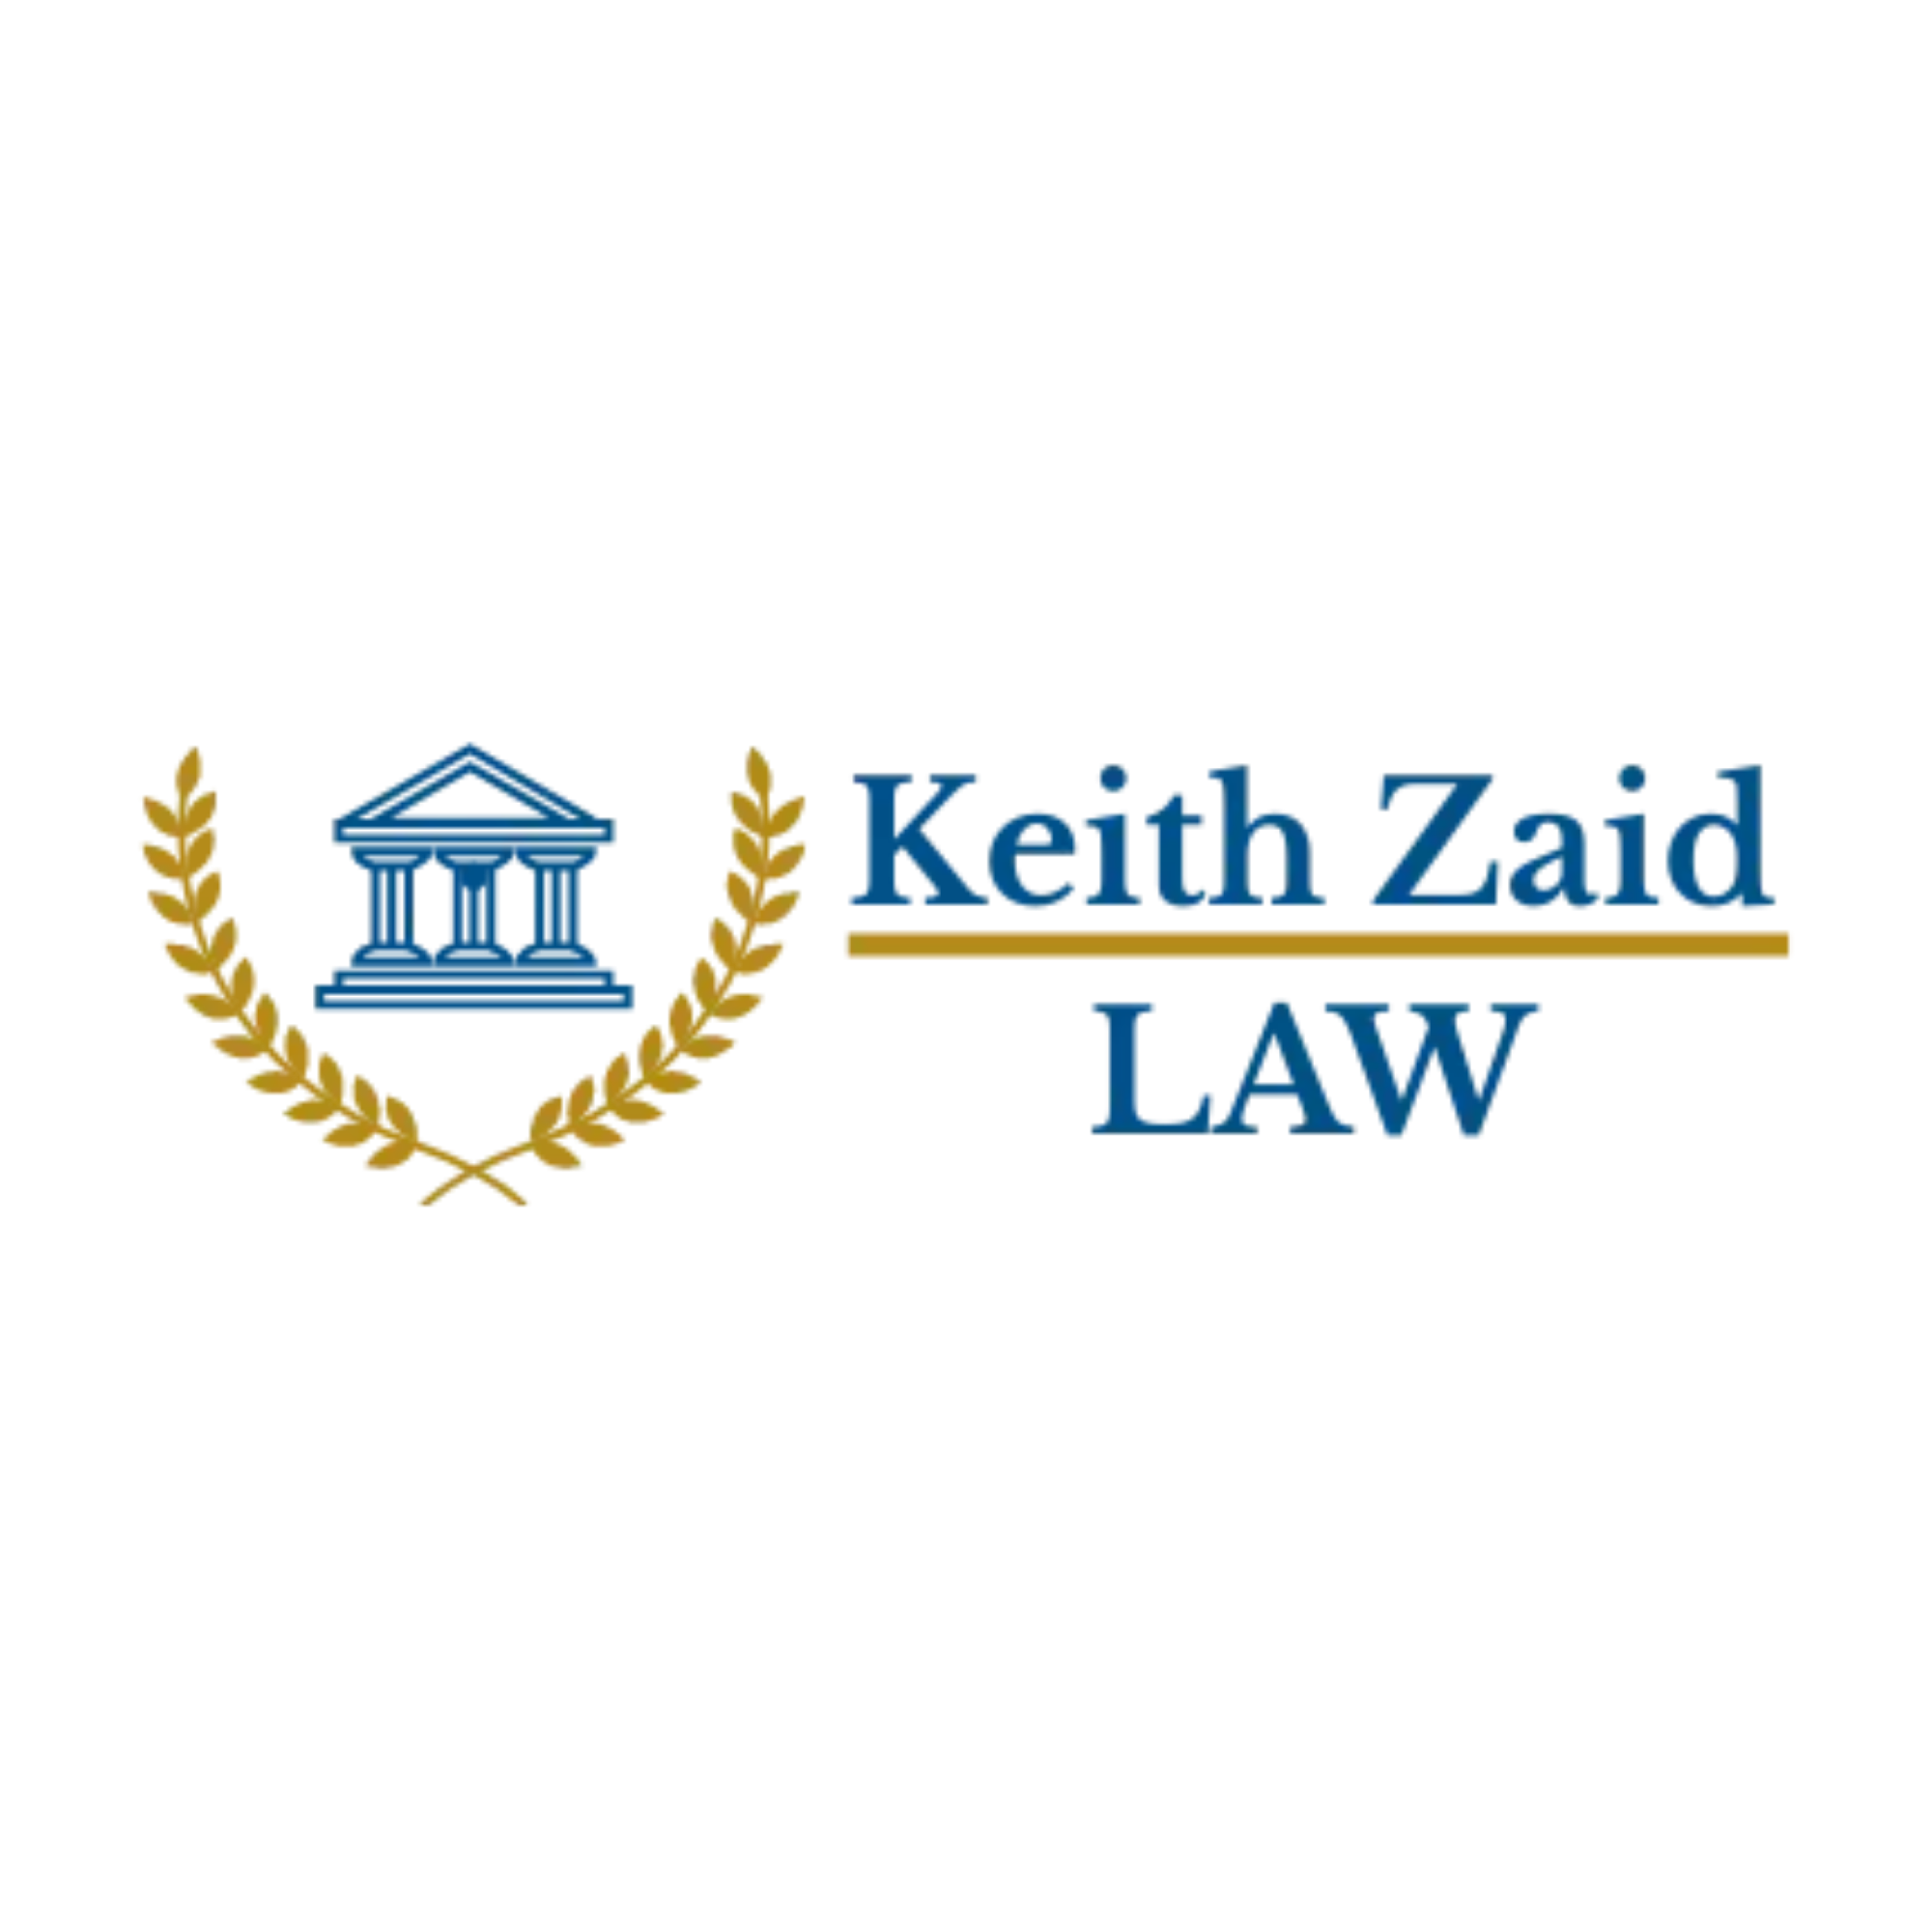 Keith Zaid Law